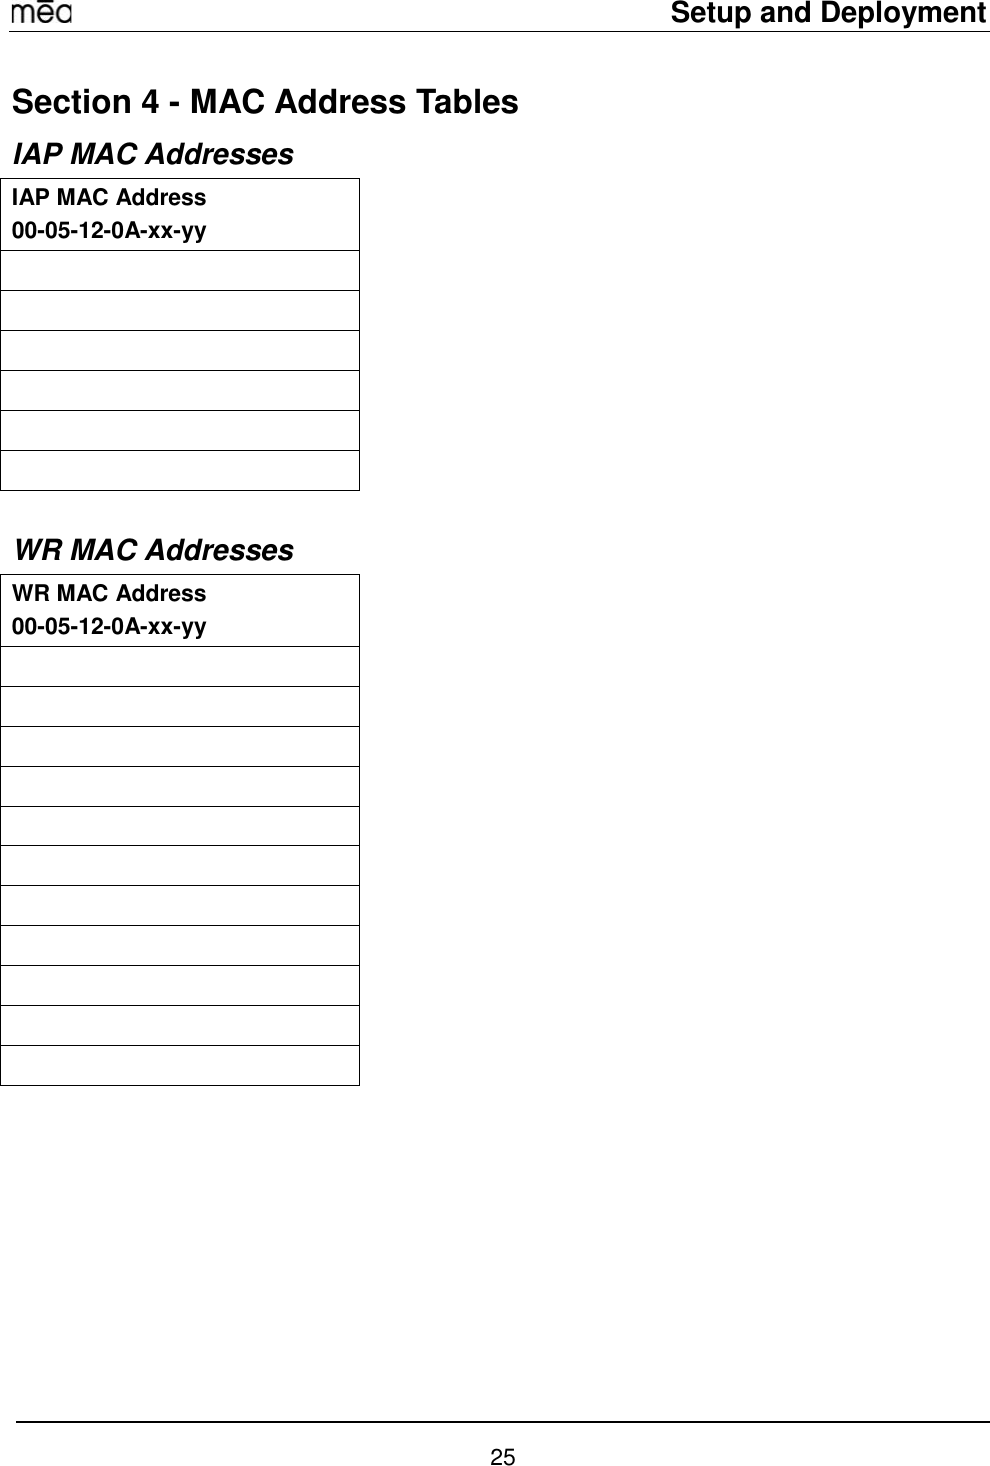     Setup and Deployment  25 Section 4 - MAC Address Tables IAP MAC Addresses IAP MAC Address 00-05-12-0A-xx-yy        WR MAC Addresses  WR MAC Address 00-05-12-0A-xx-yy            